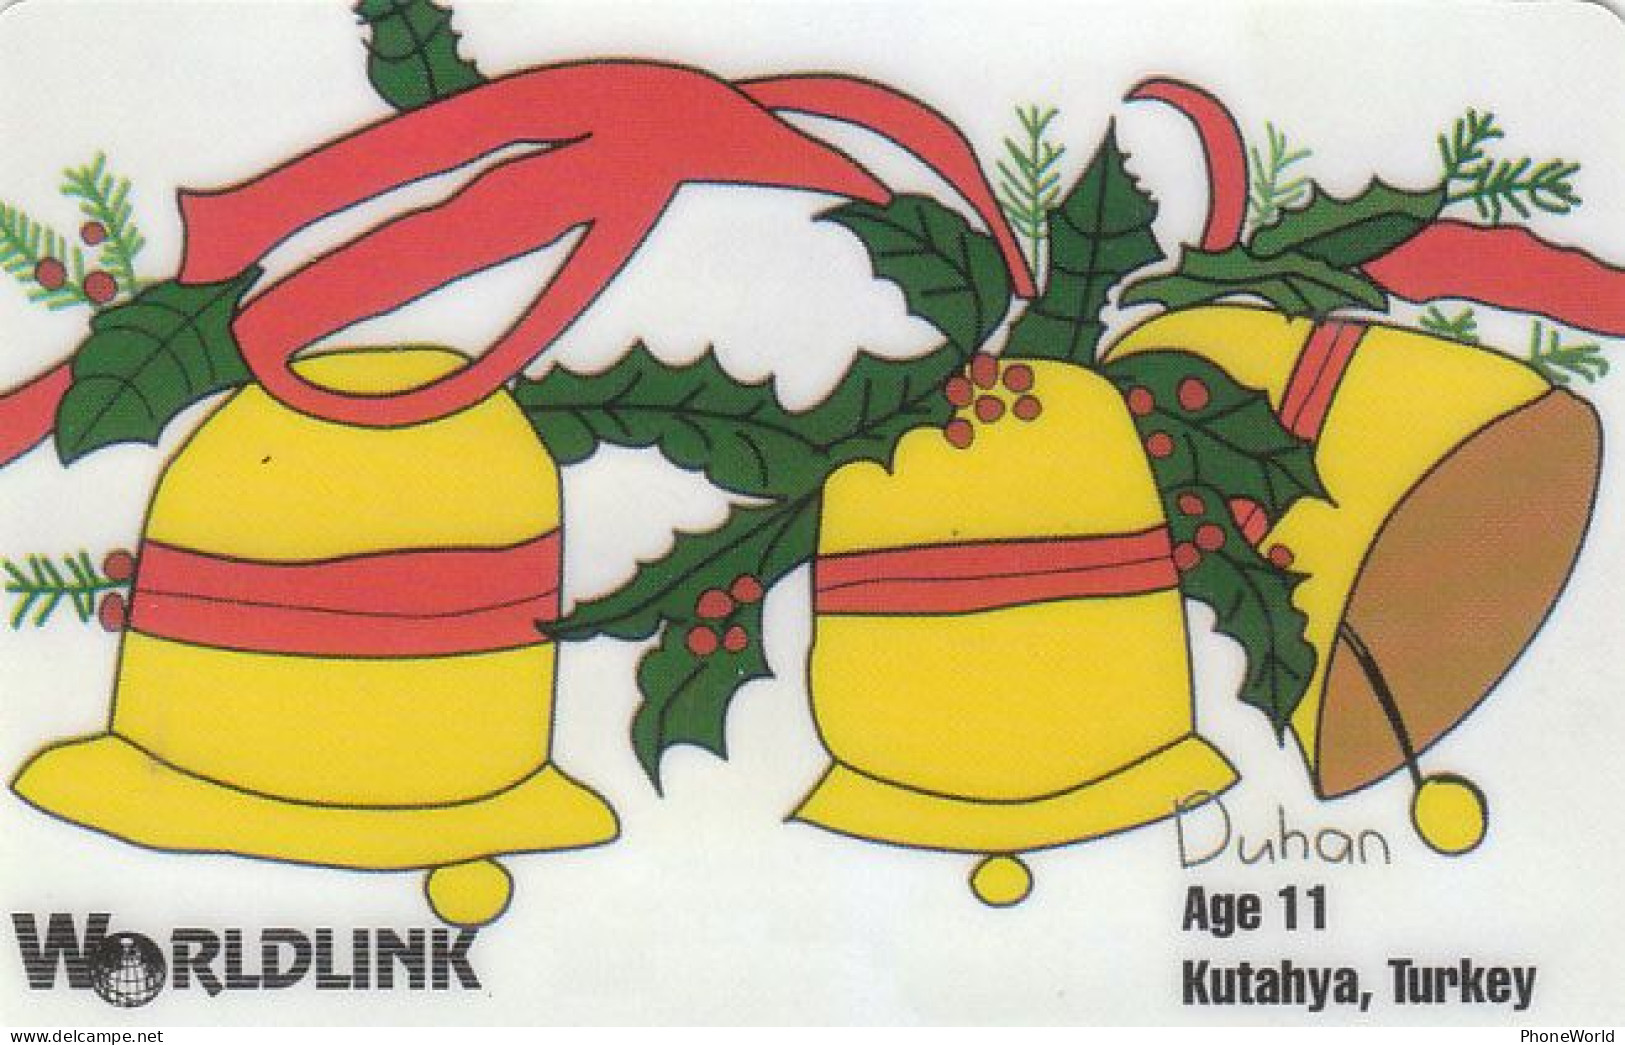 US, WorldLink & Christmas Bells, Children's Drawing - Worldlink